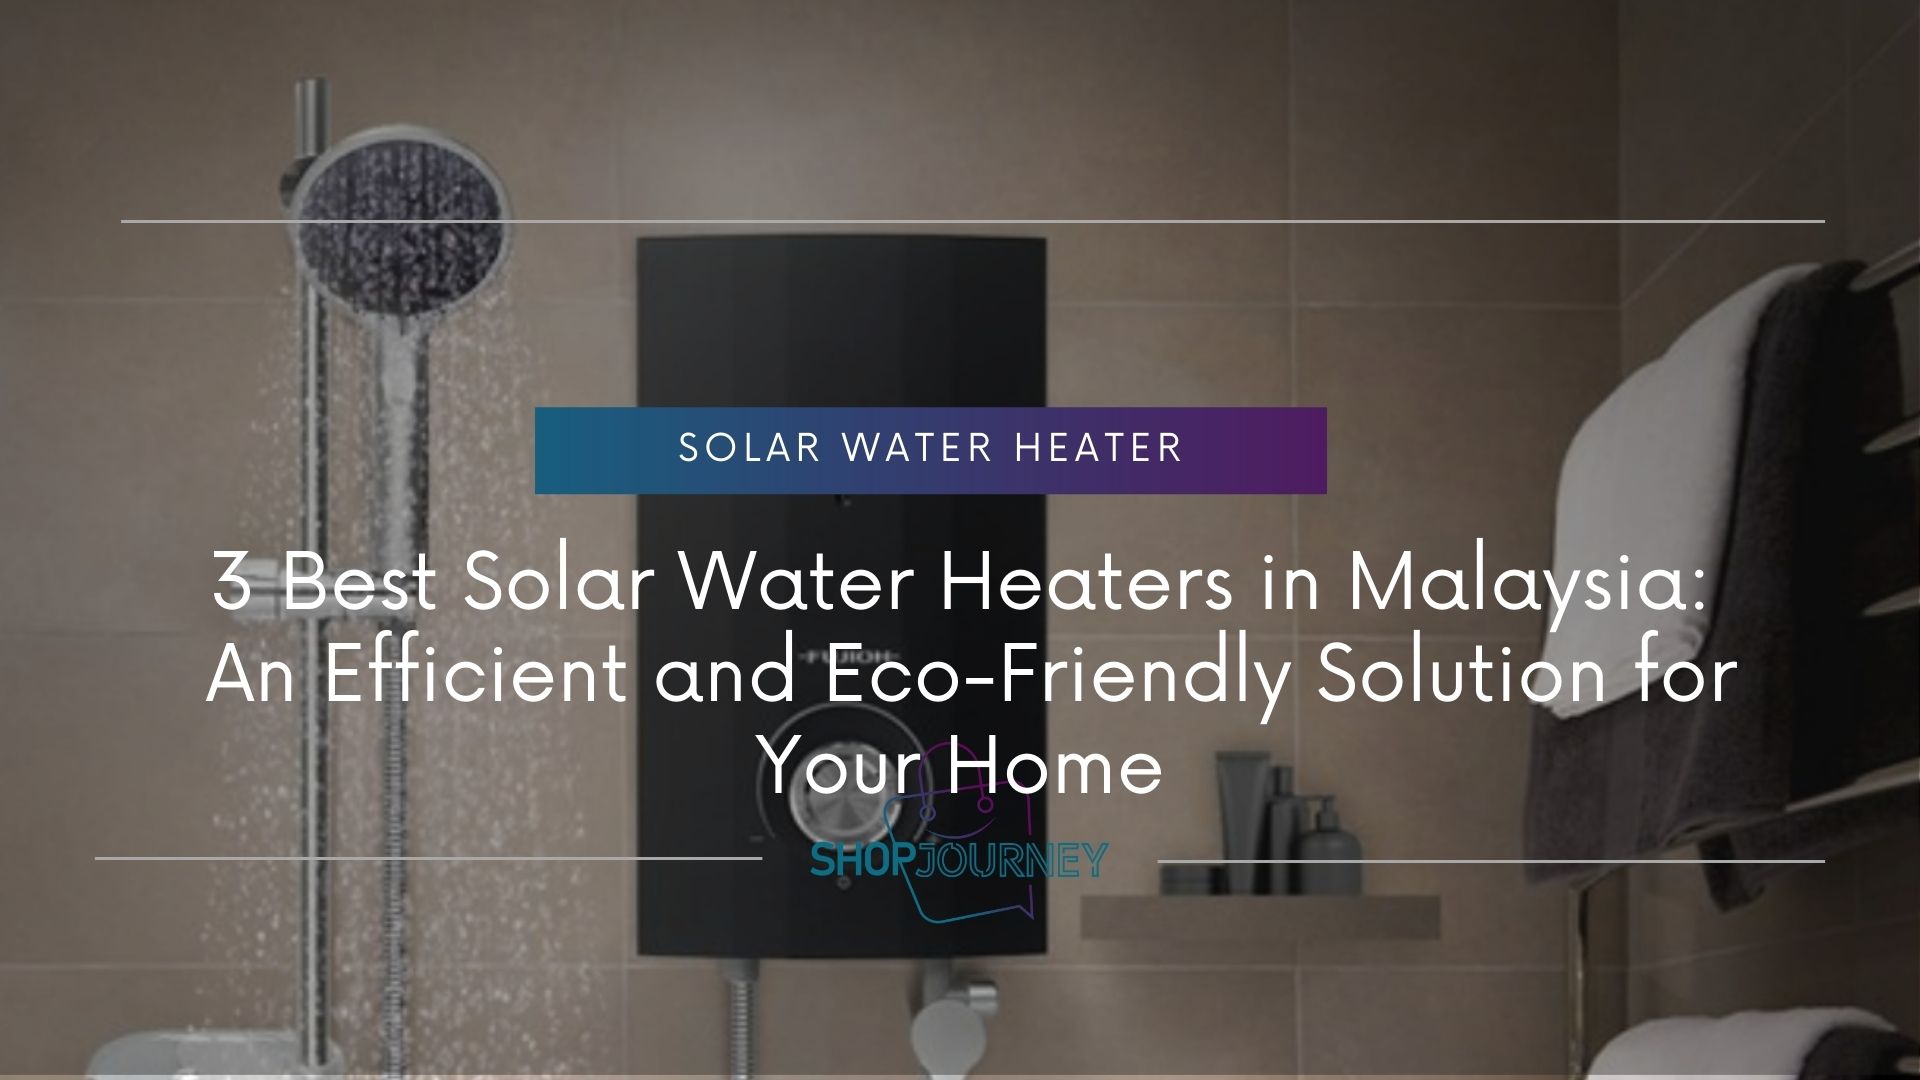 Solar water heater - Shop journey